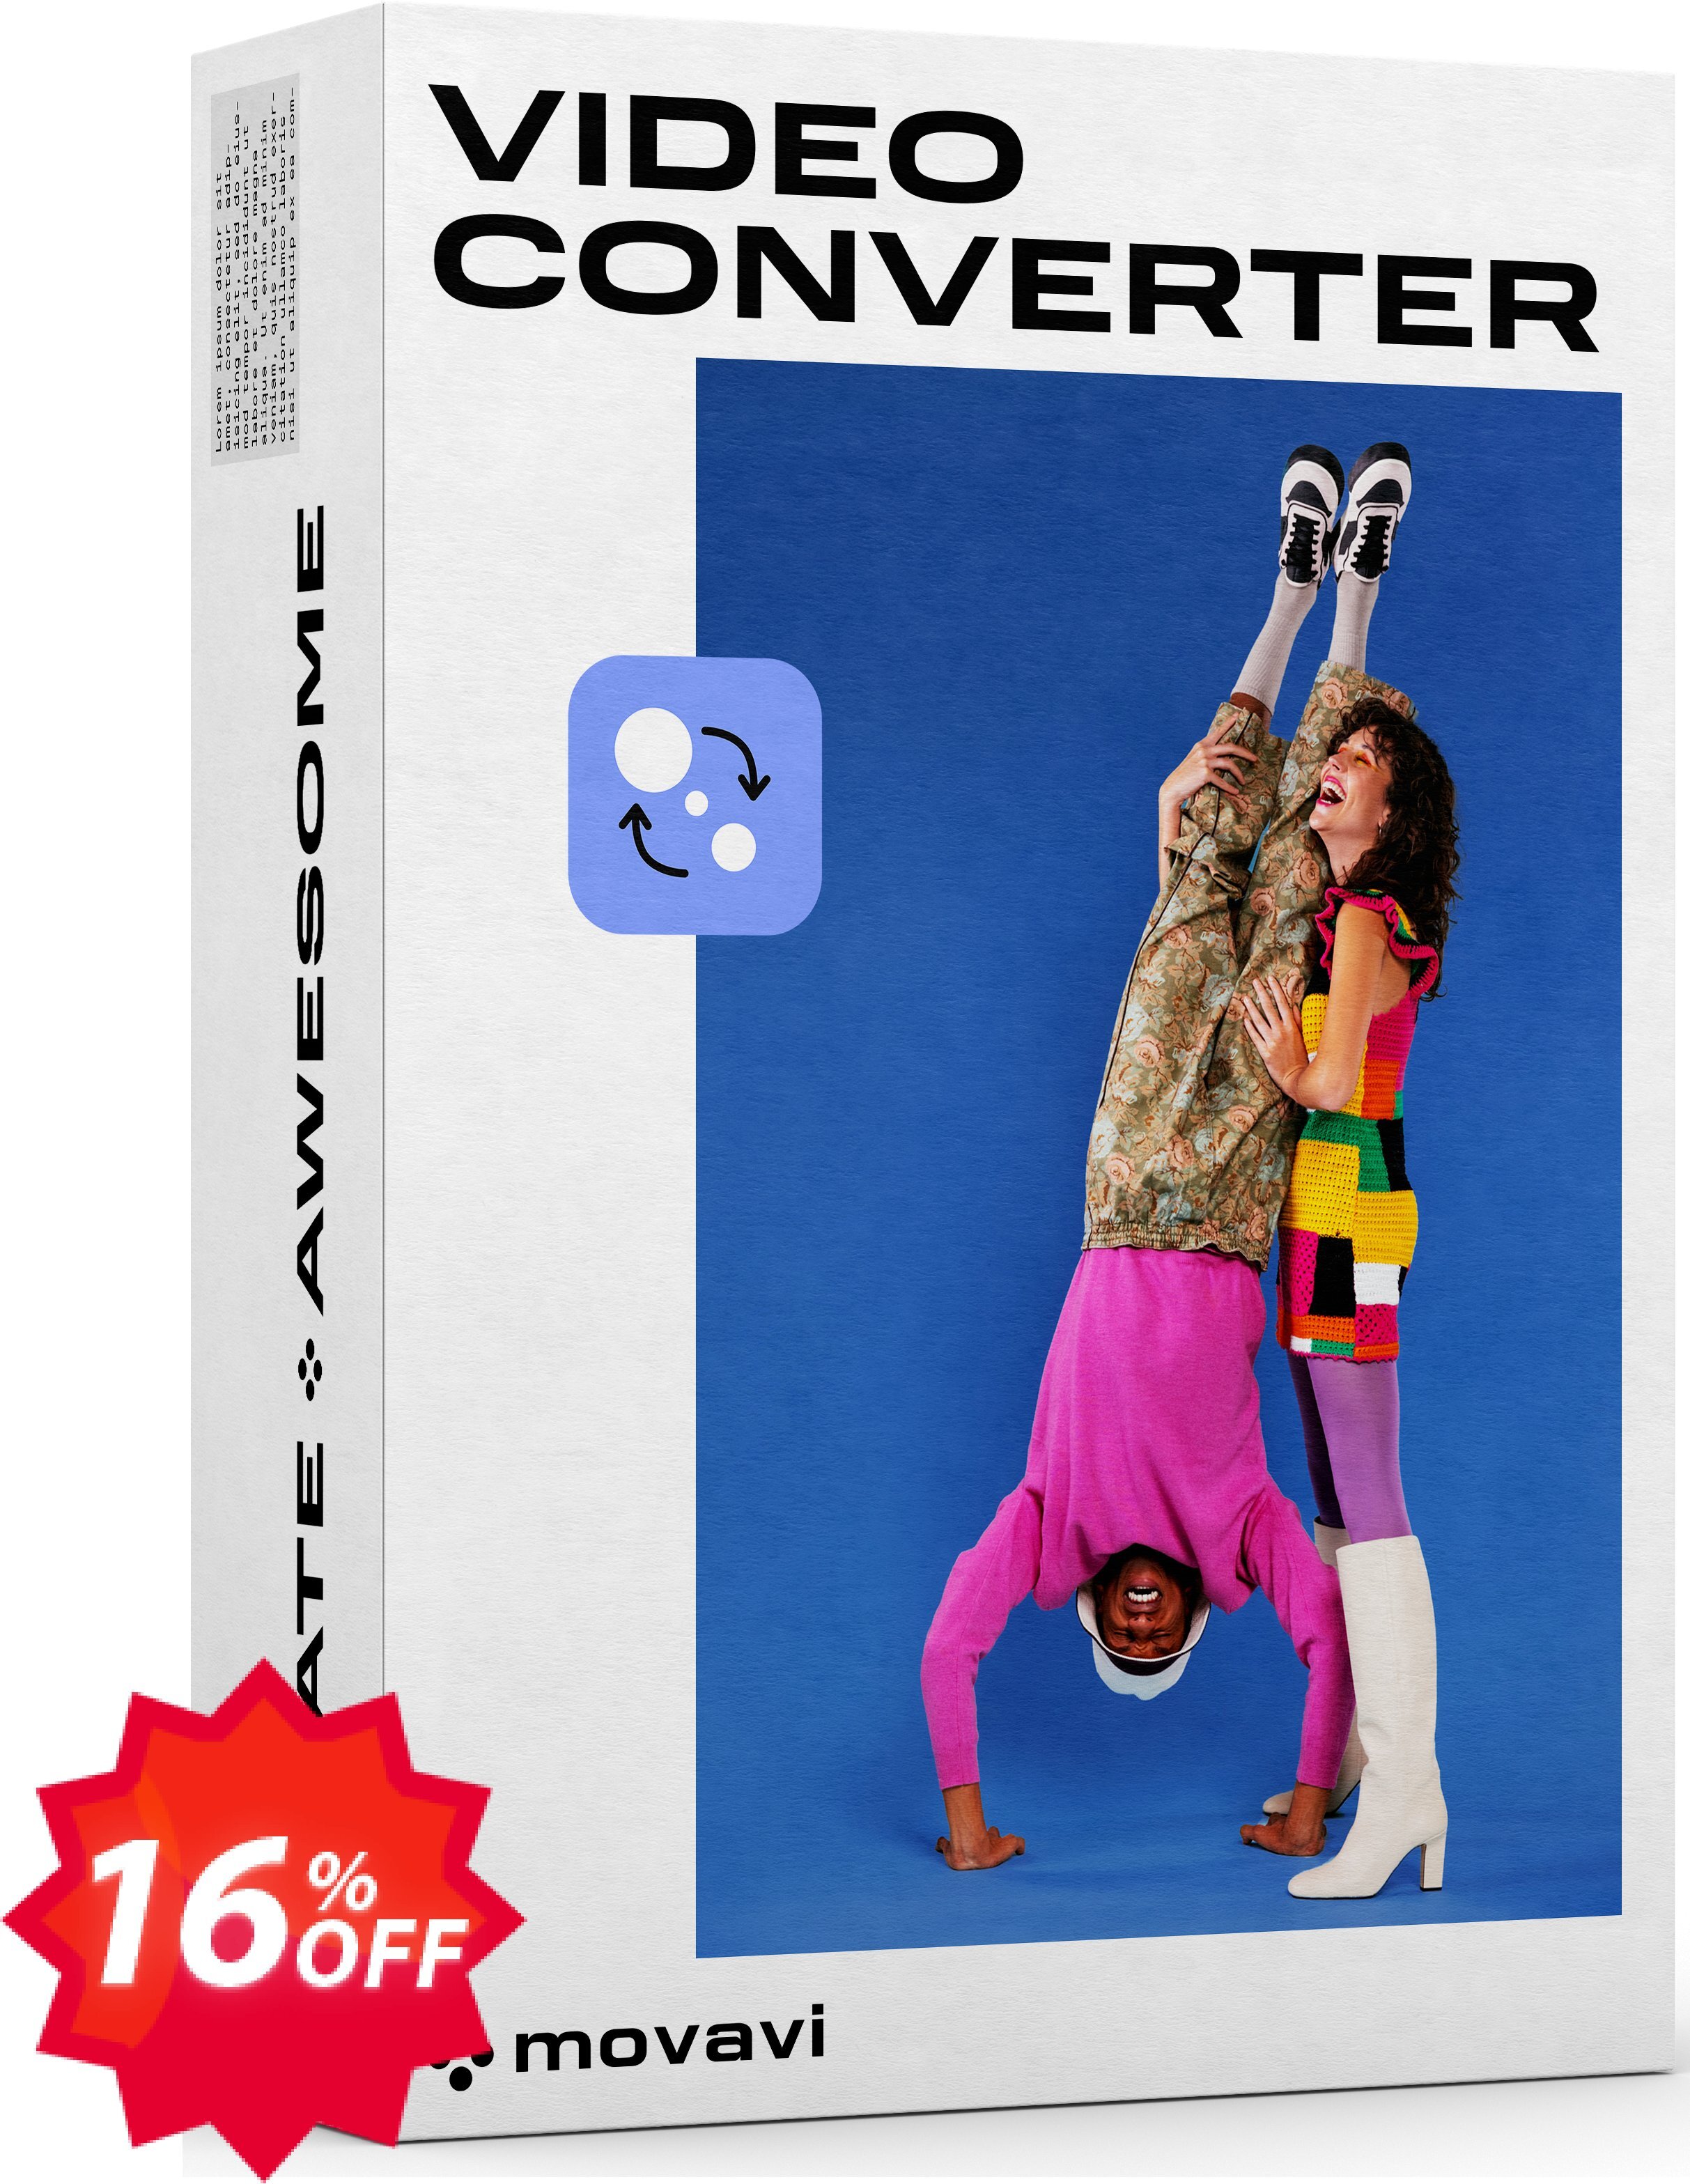 Movavi Video Converter  Premium, Business  Coupon code 16% discount 